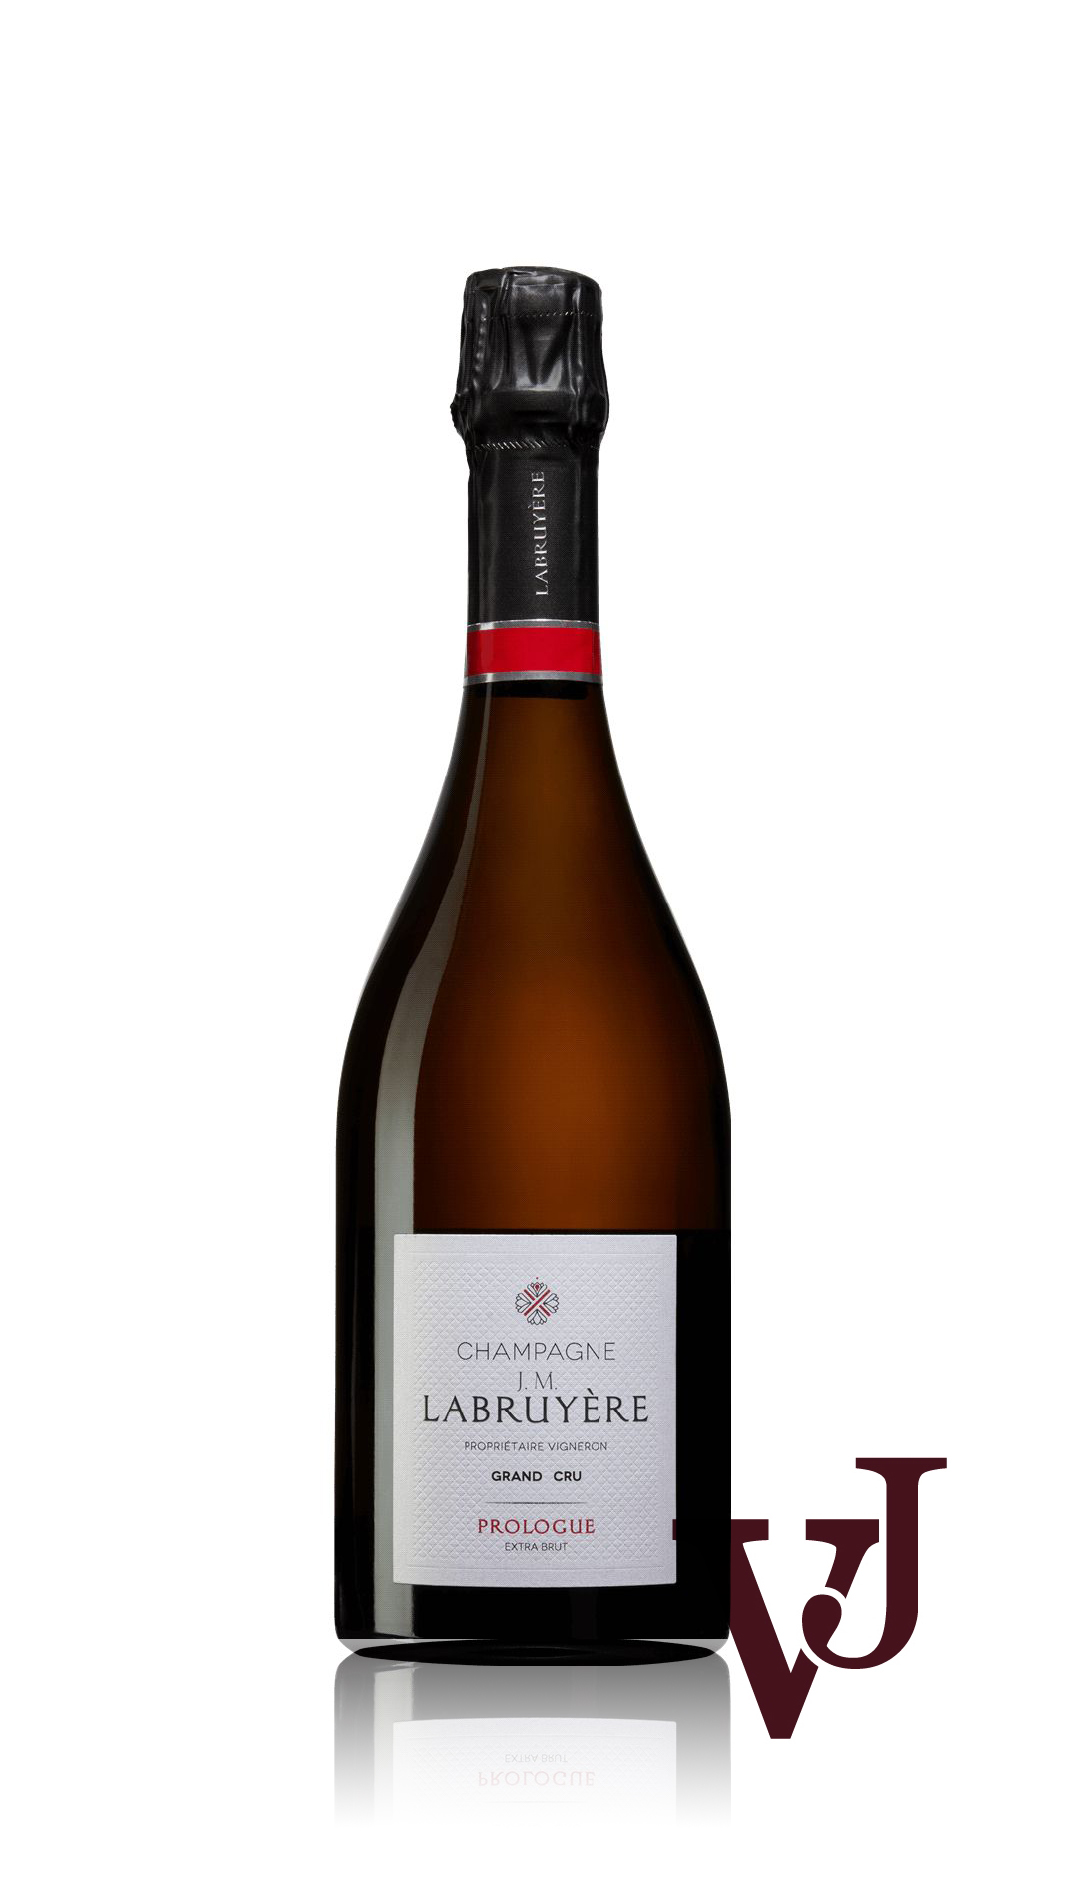 Mousserande Vin - Labruyère Prologue artikel nummer 9002701 från producenten Champagne J.M. Labruyère från området Frankrike